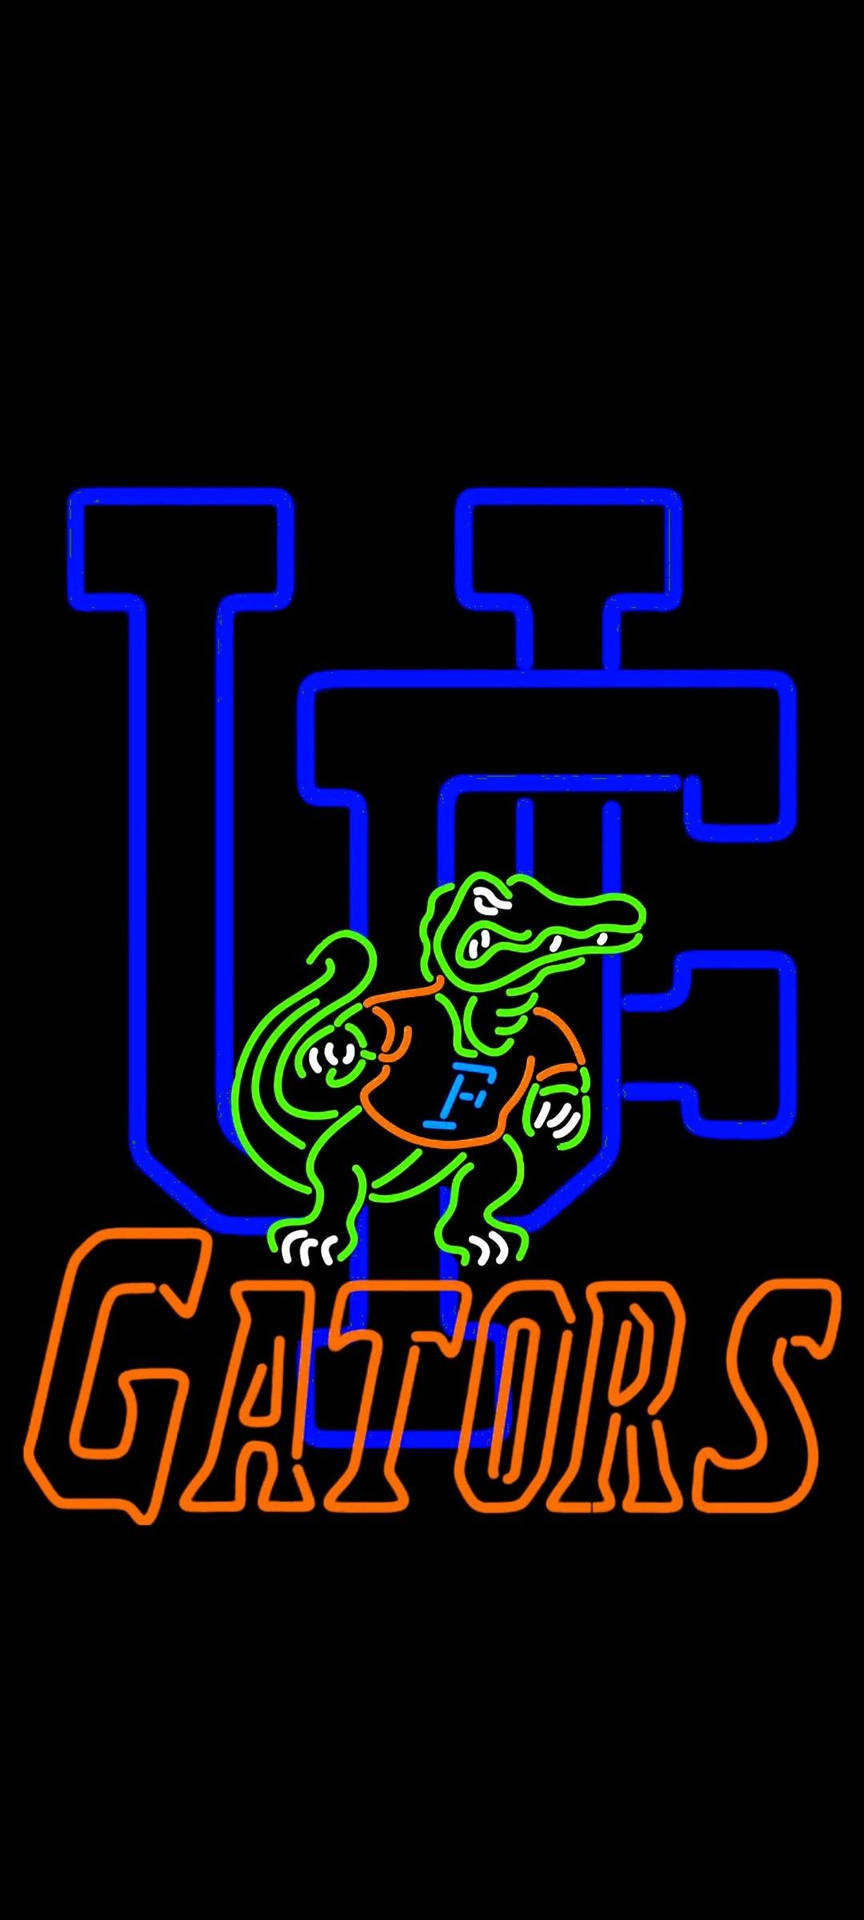 download ufl gators